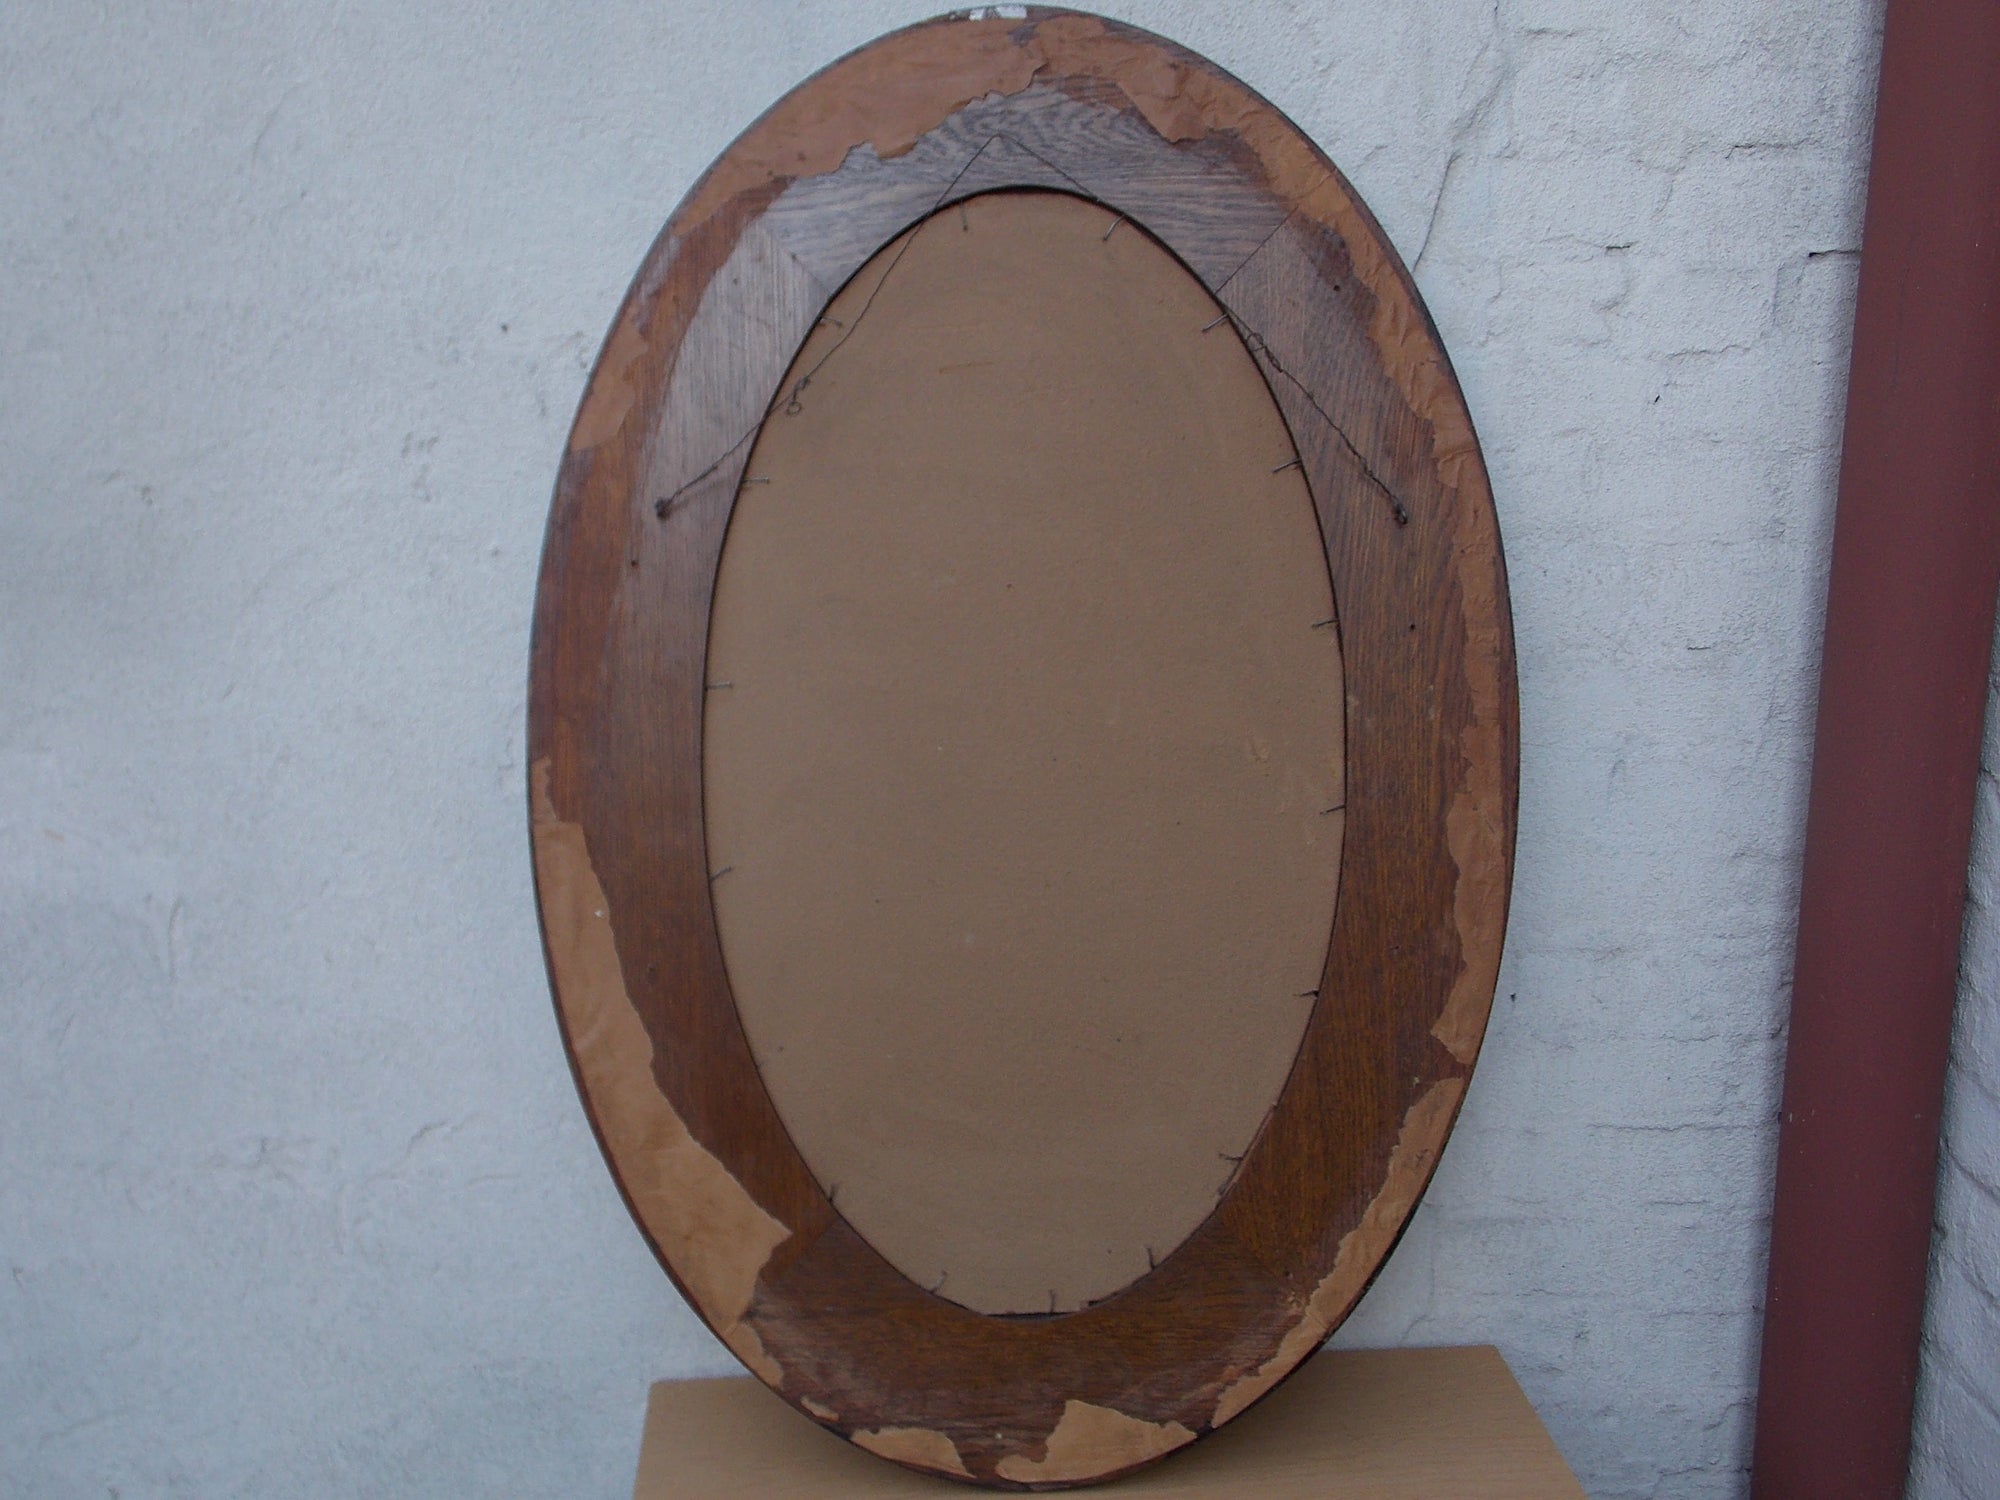 I Like Mike's Mid Century Modern Wall Decor & Art Large Oval Dark Wood Framed Beveled Mirror